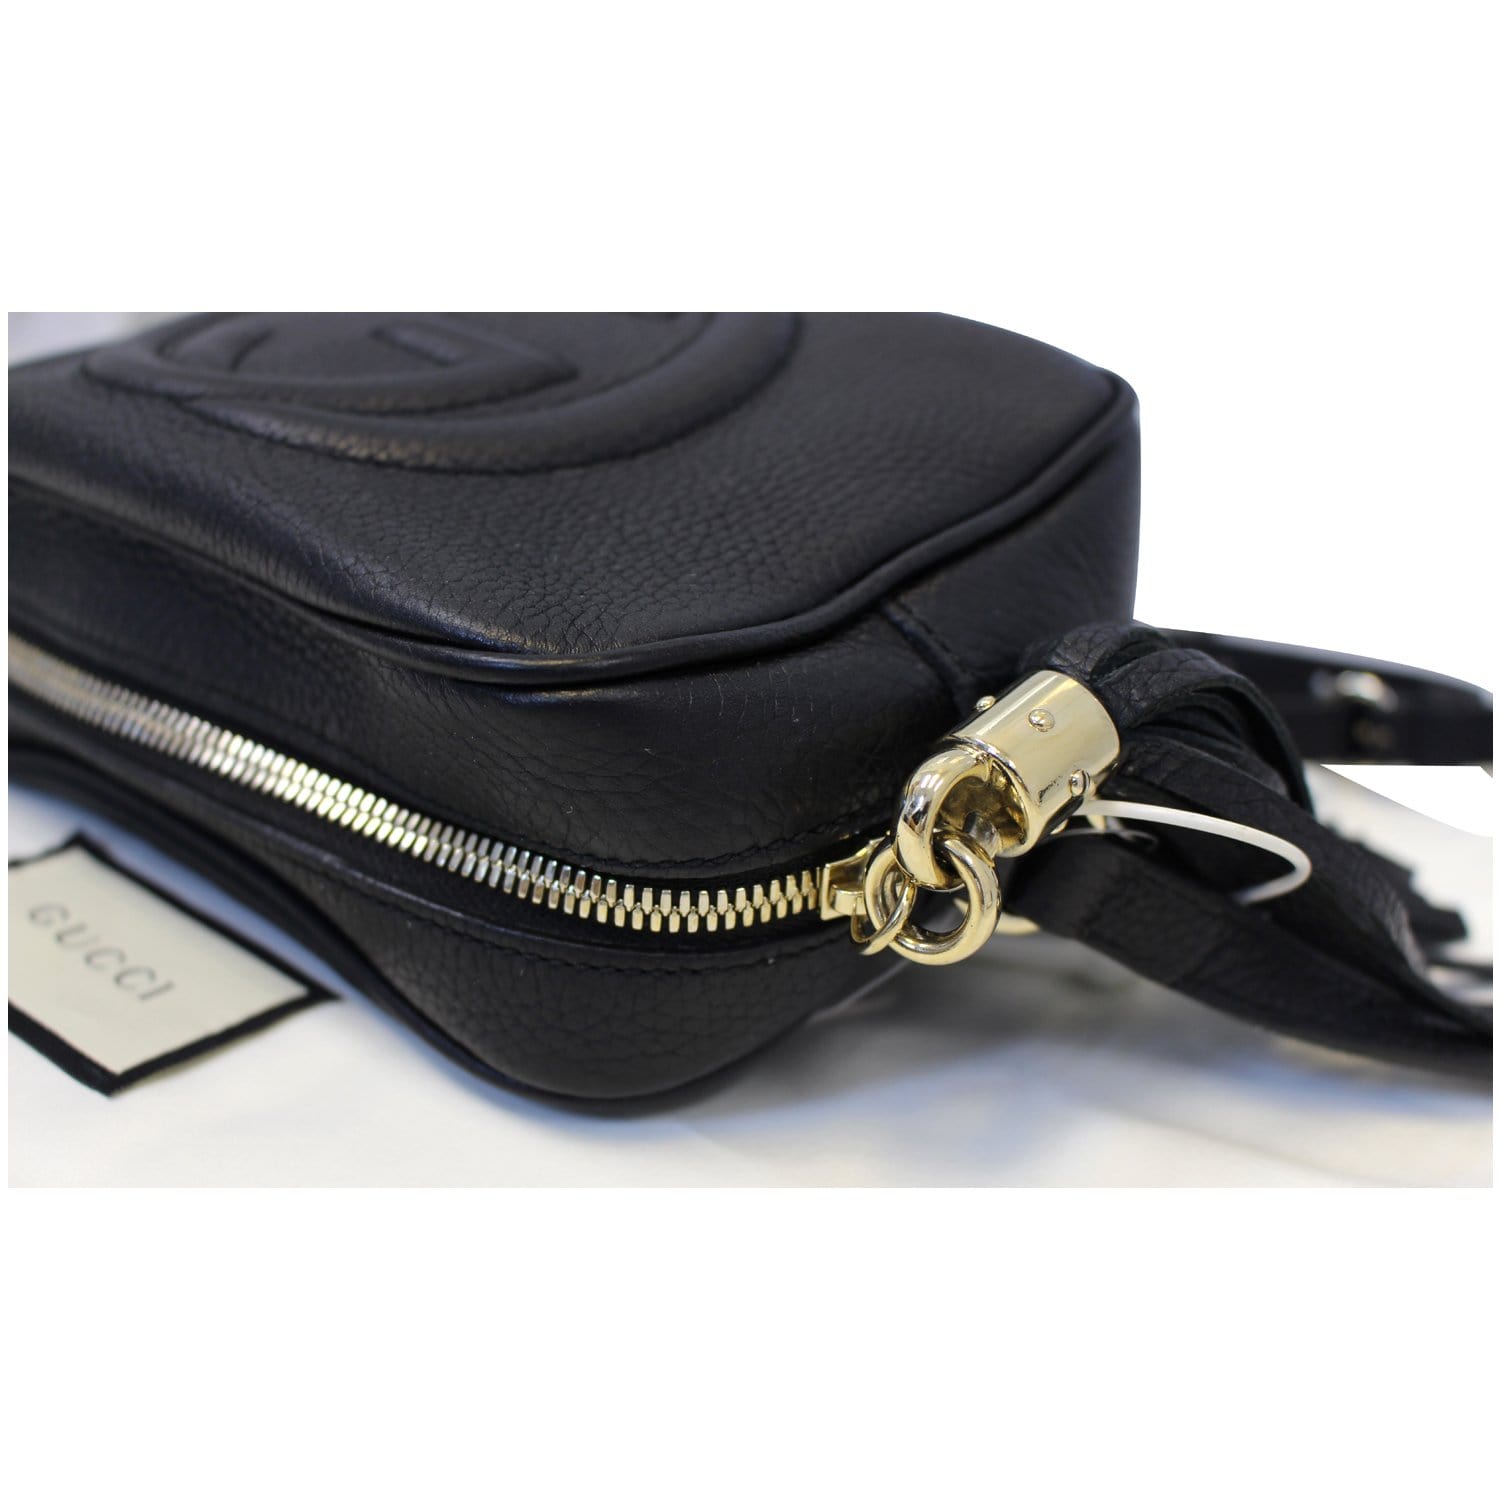 GUCCI Soho Disco Black Leather Crossbody Bag 308364-US